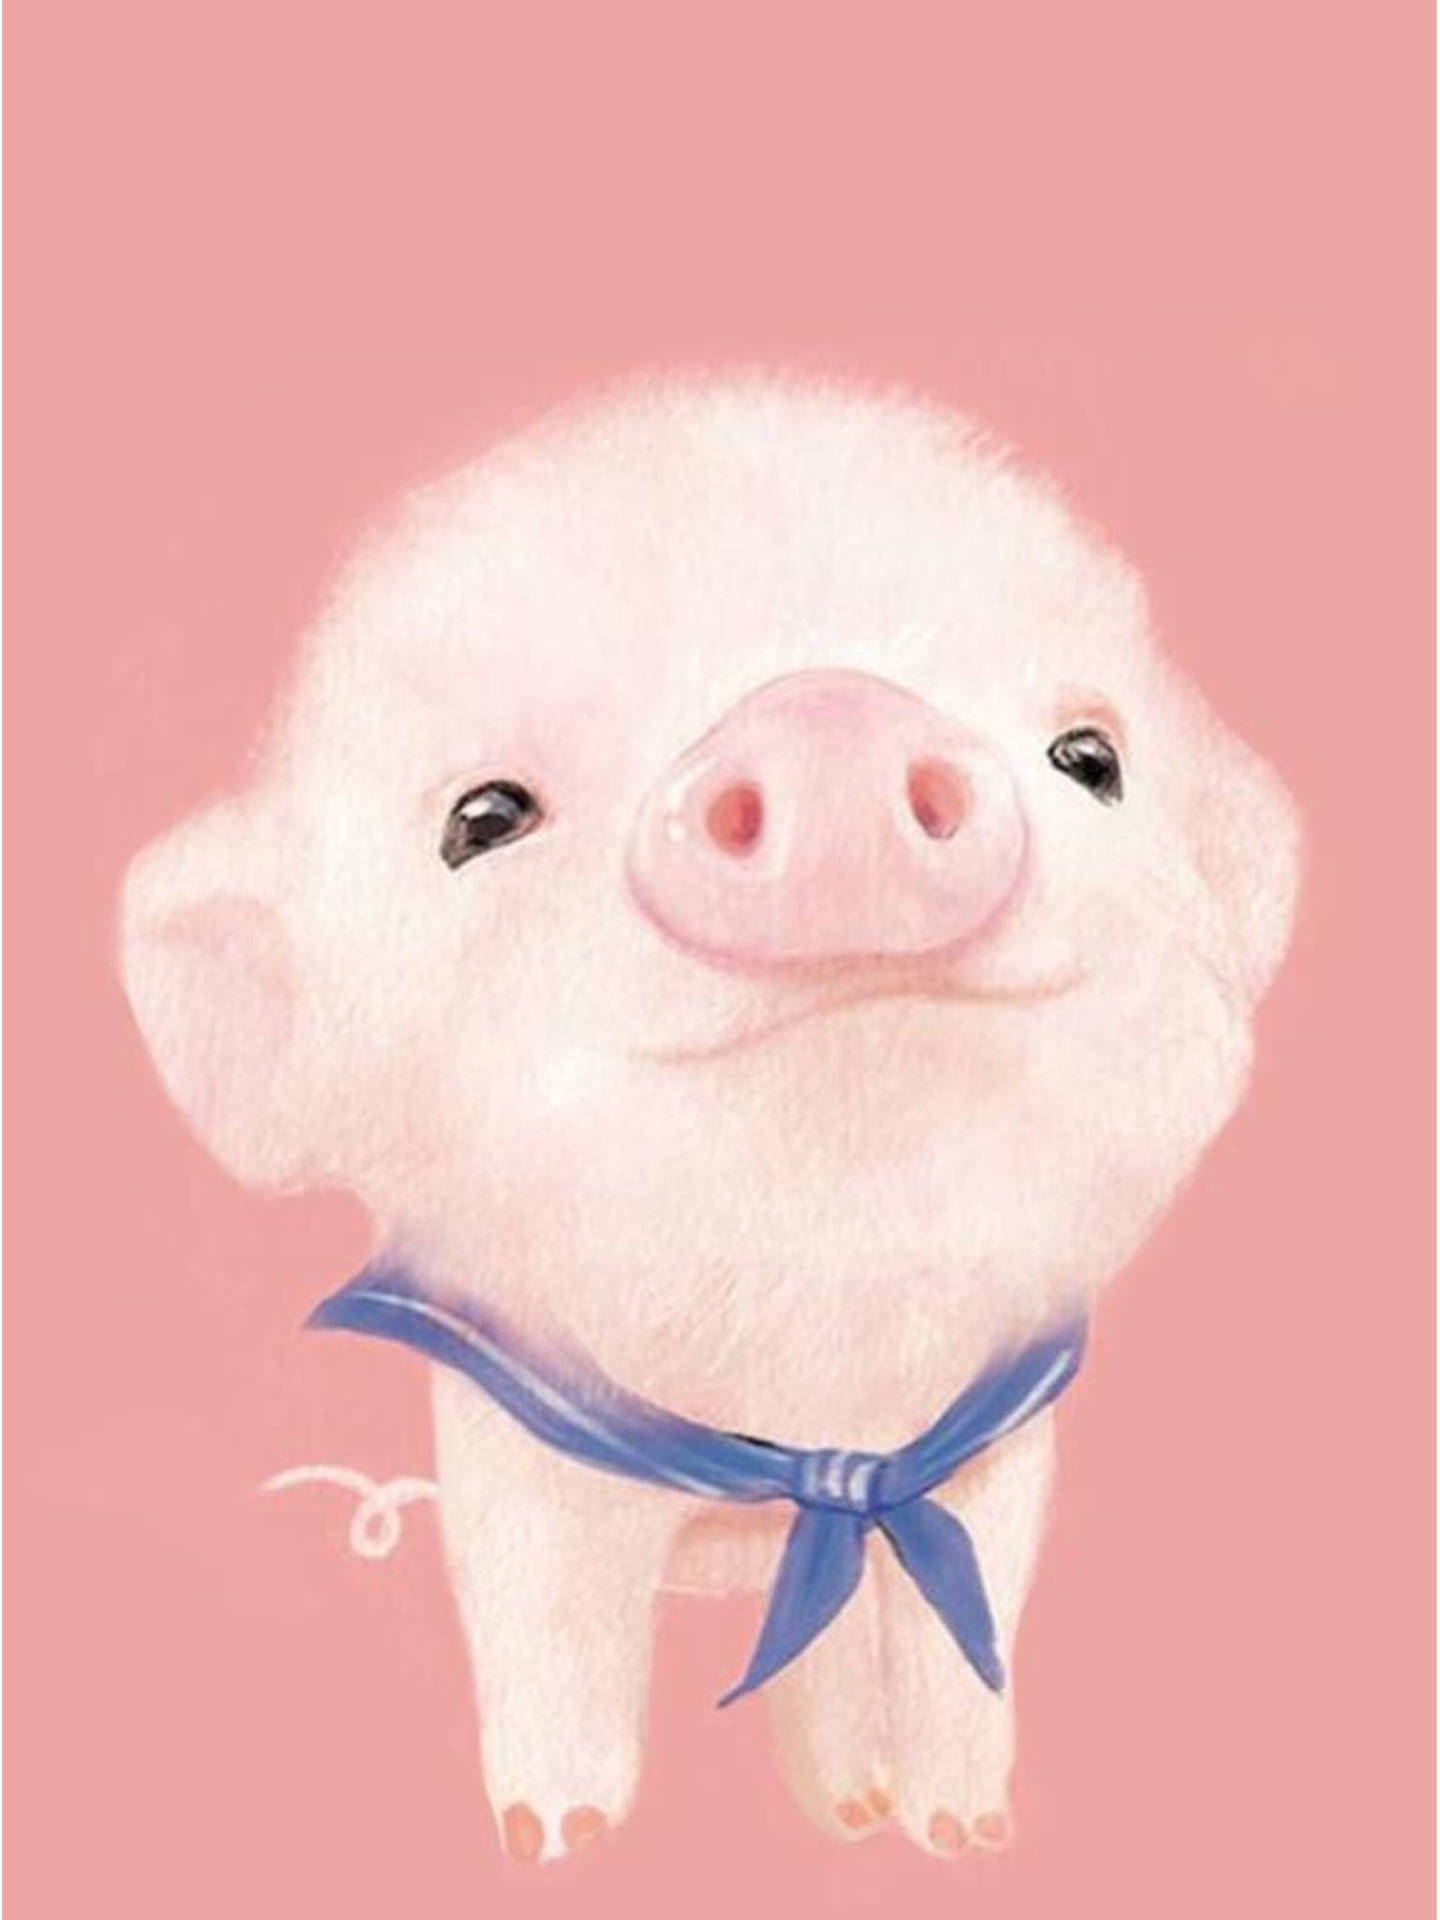 Baby Pig Artwork Kawaii Ipad Picture